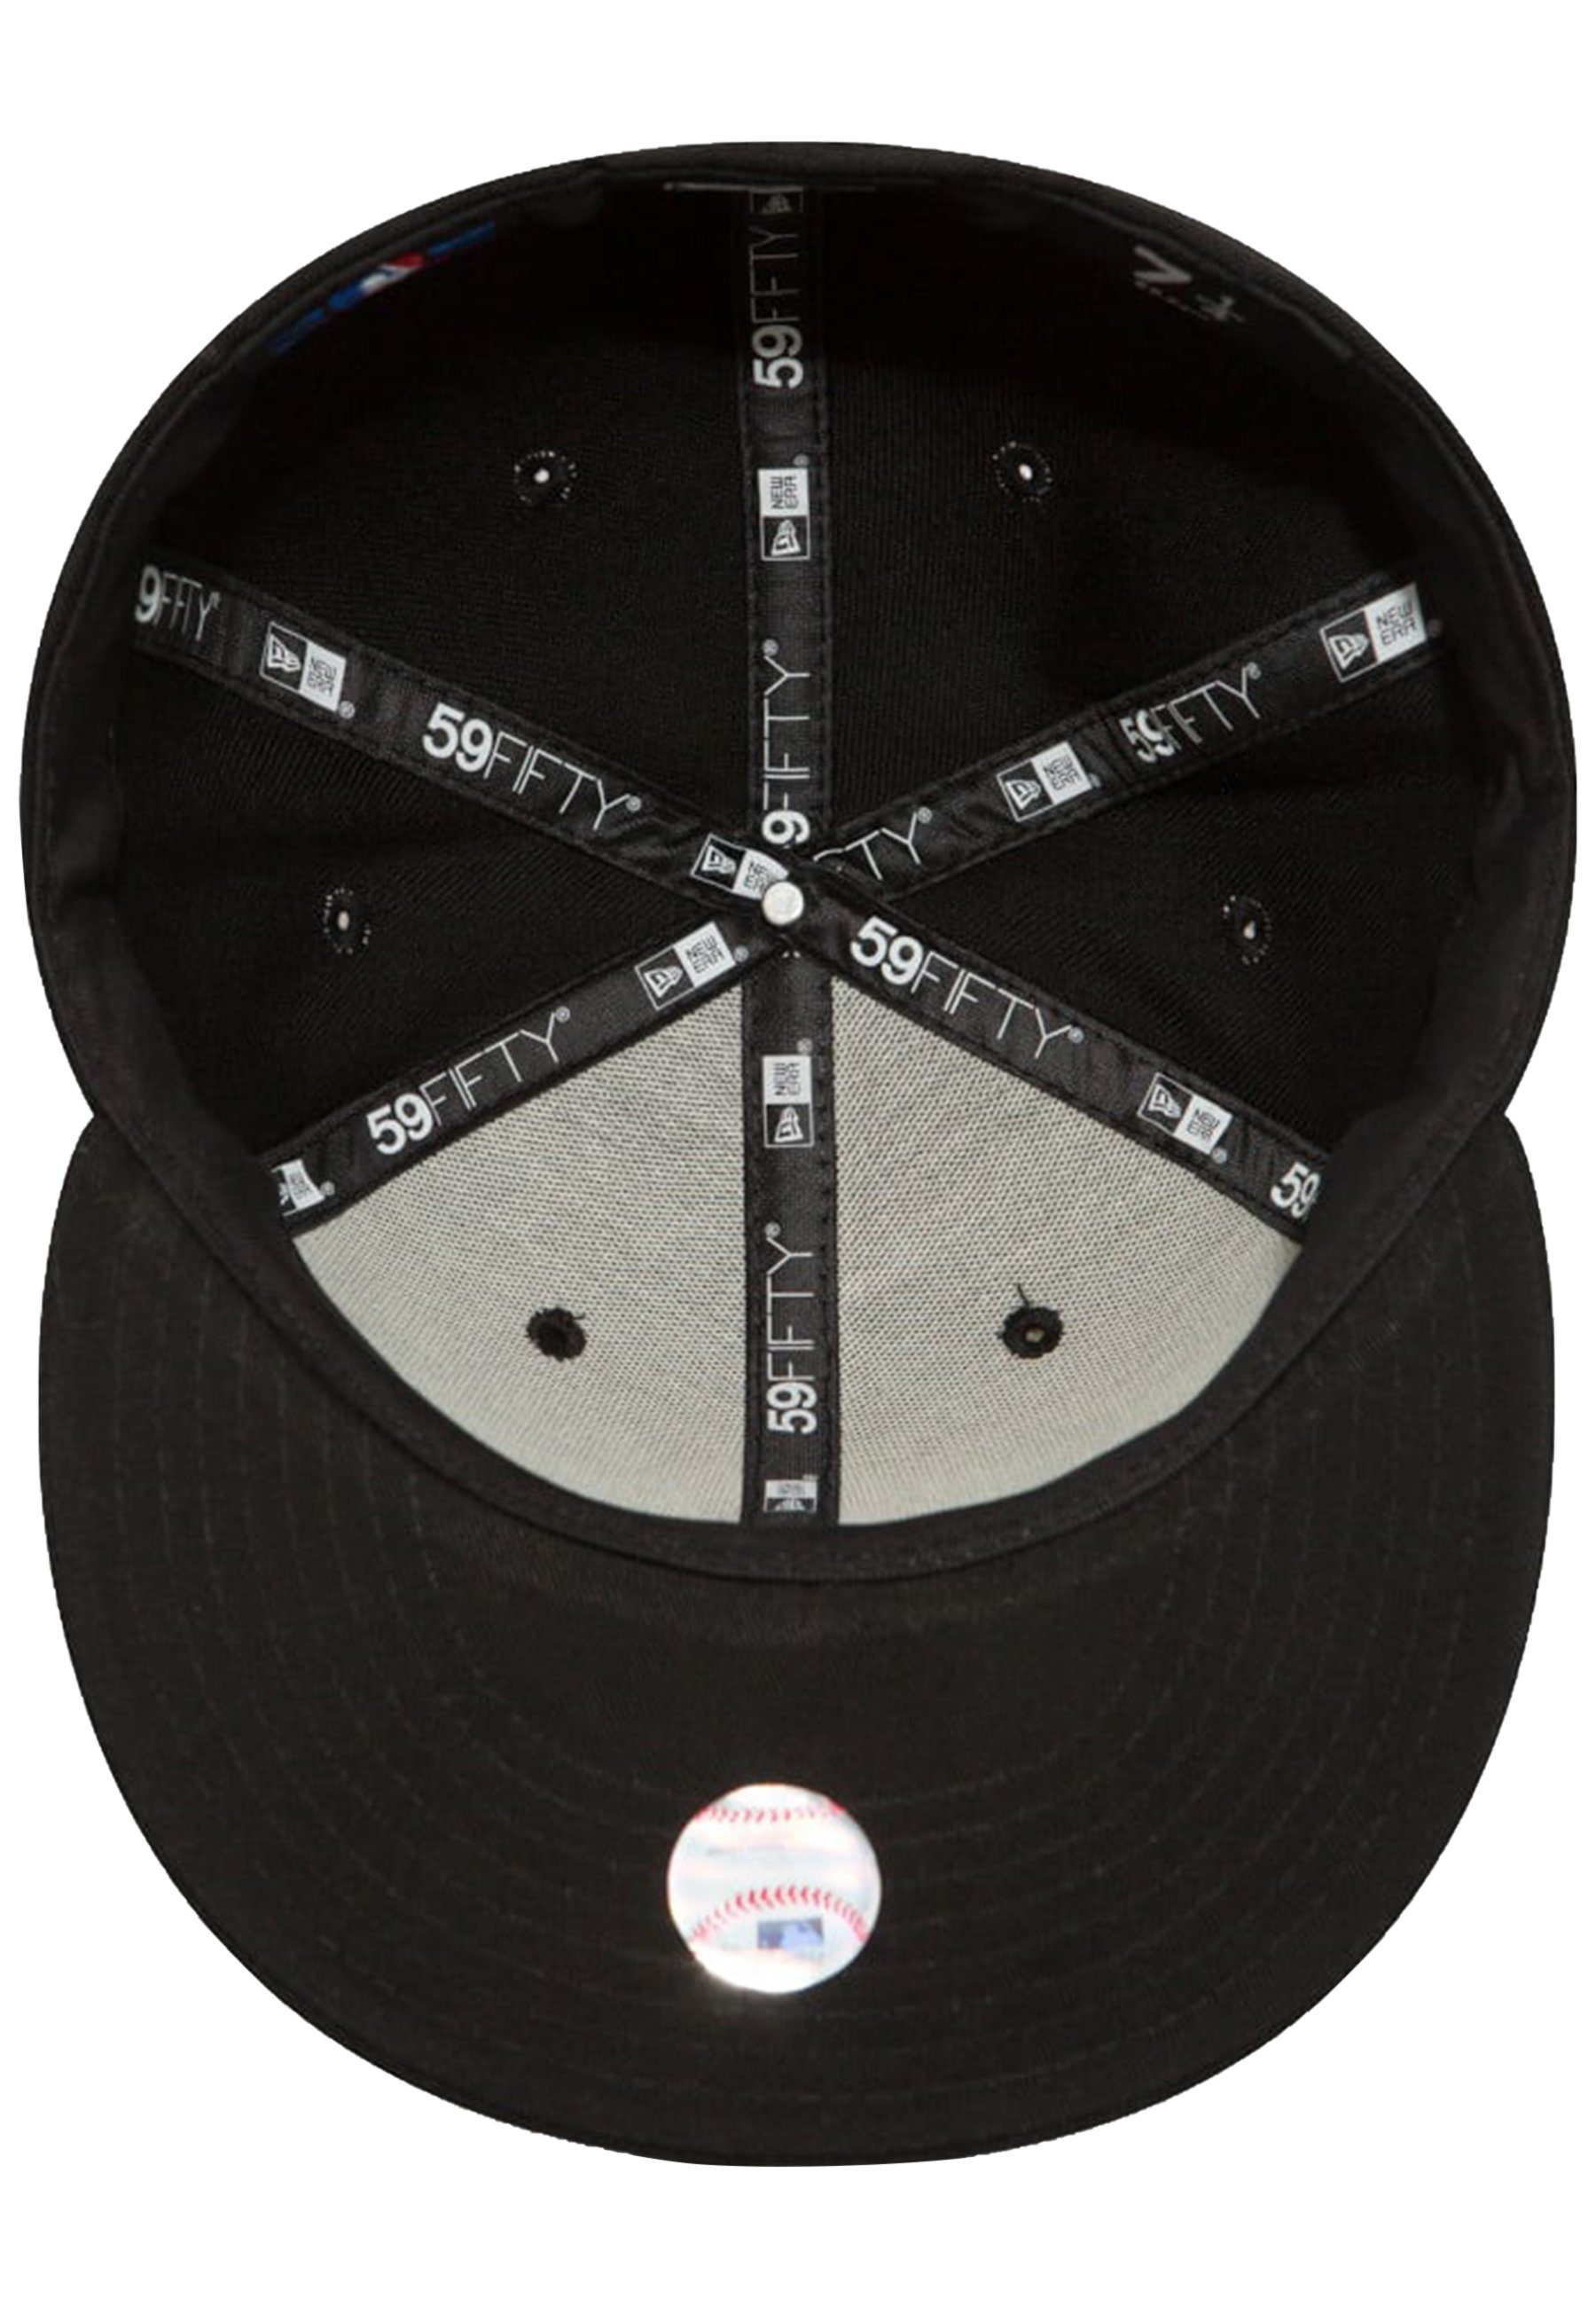 Yankees Snapback Era (1-St) York 59Fifty Cap schwarz New New